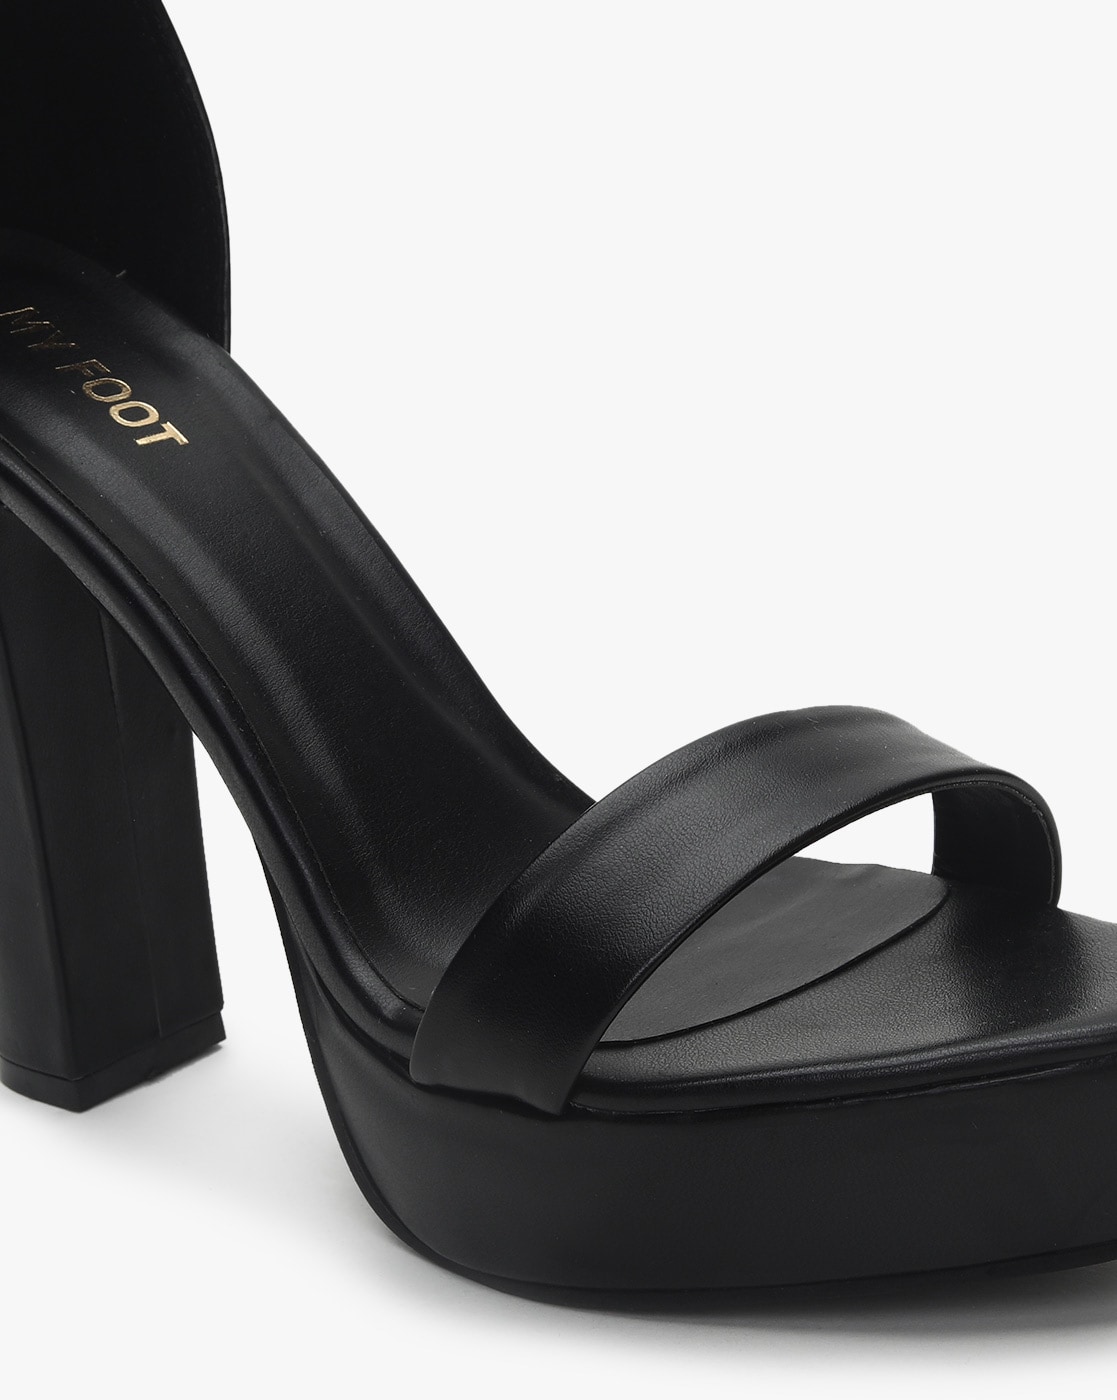 Lipstik Brand 'Nadine' platform heels, bone... - Depop